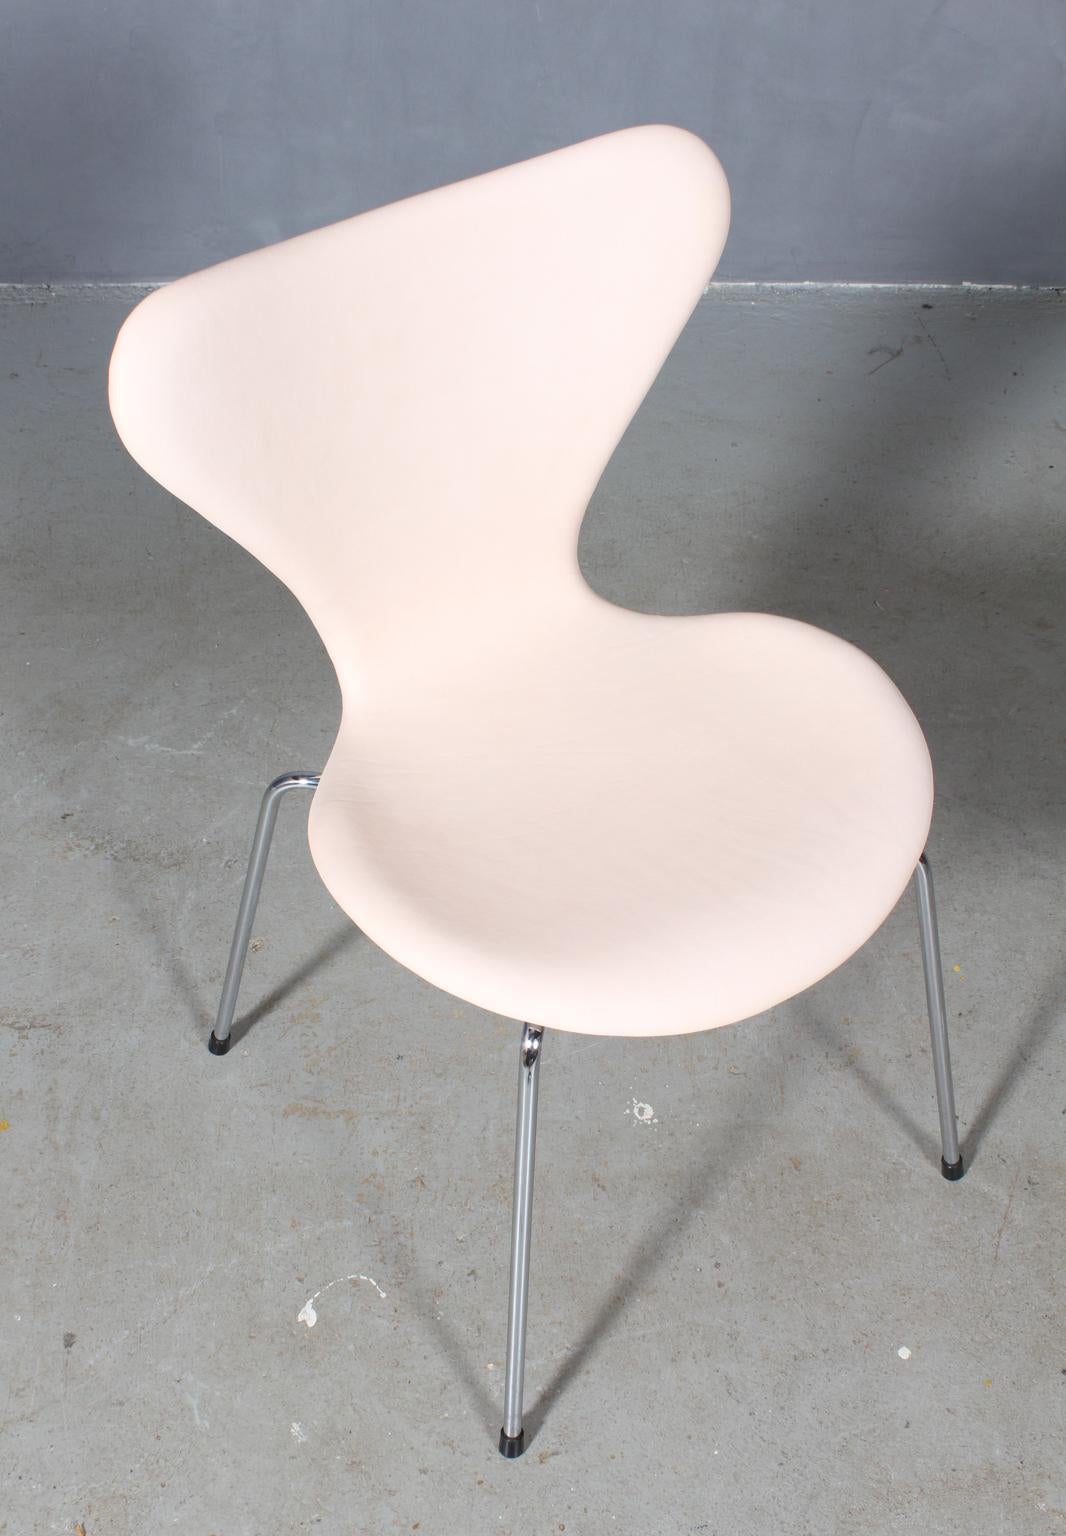 Arne Jacobsen dining chair new upholstered with nature leather.

Base of chrome steel tube.

Model 3107 Syveren, made by Fritz Hansen.